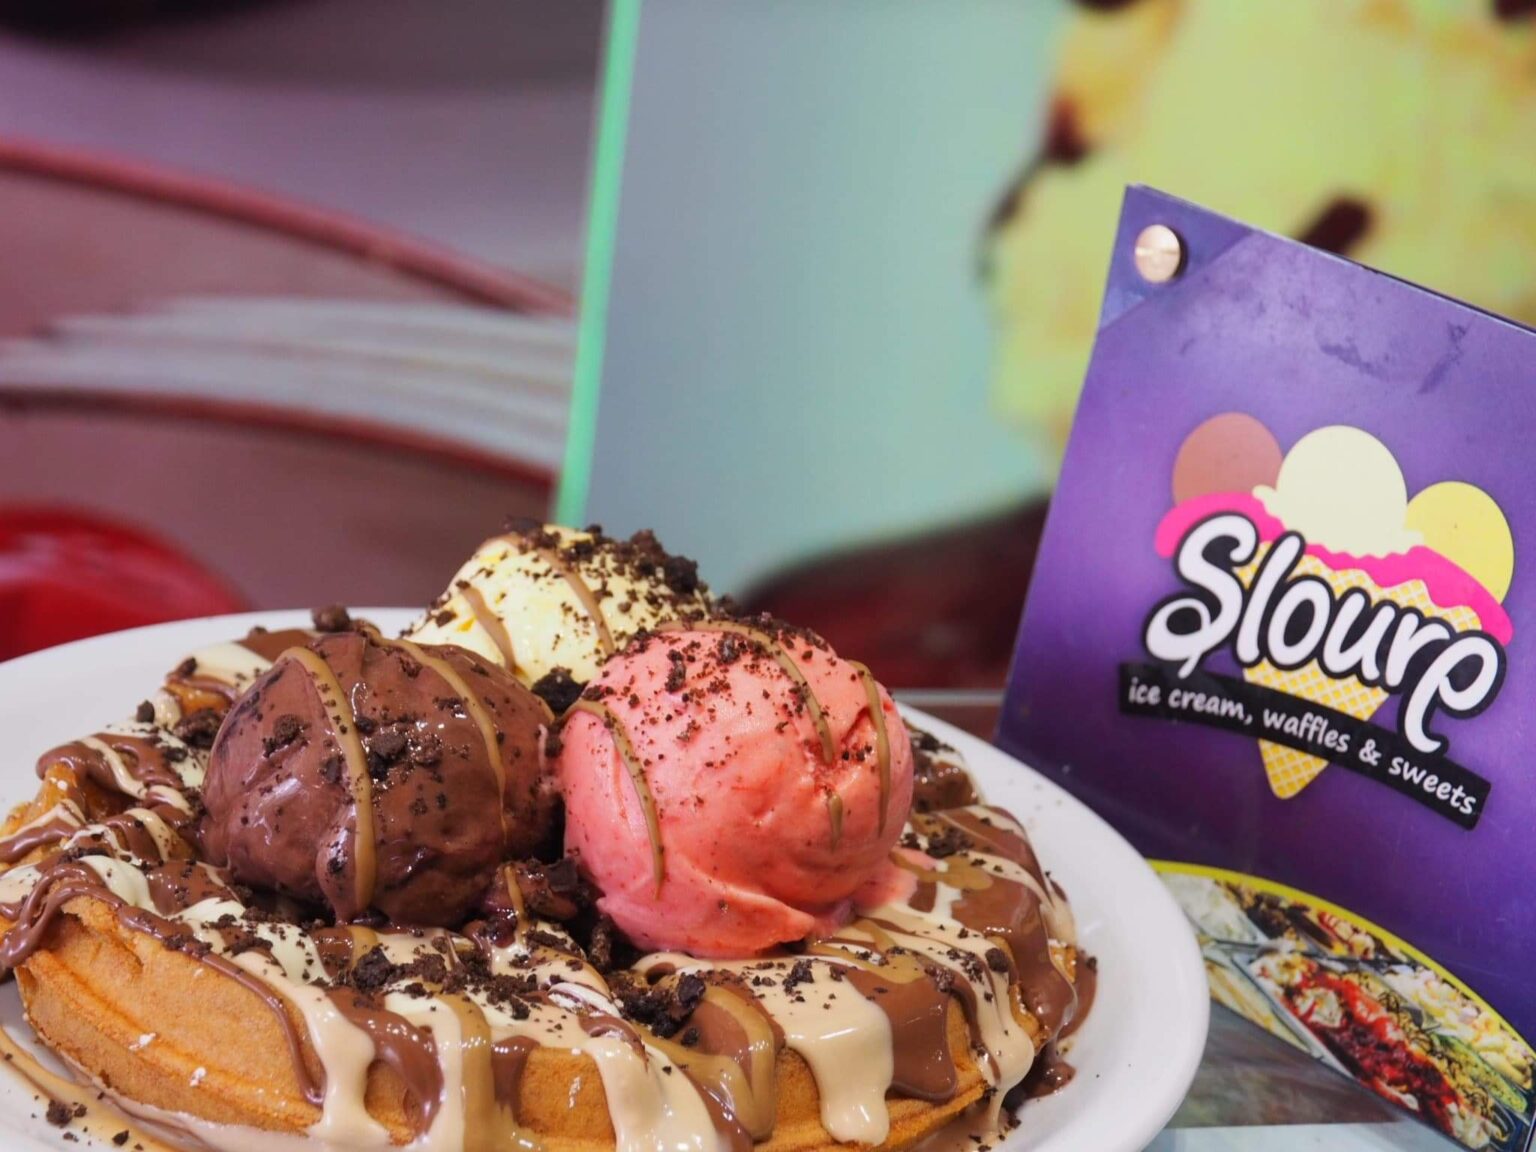 Slourp Ice Cream, Waffles & Coffee